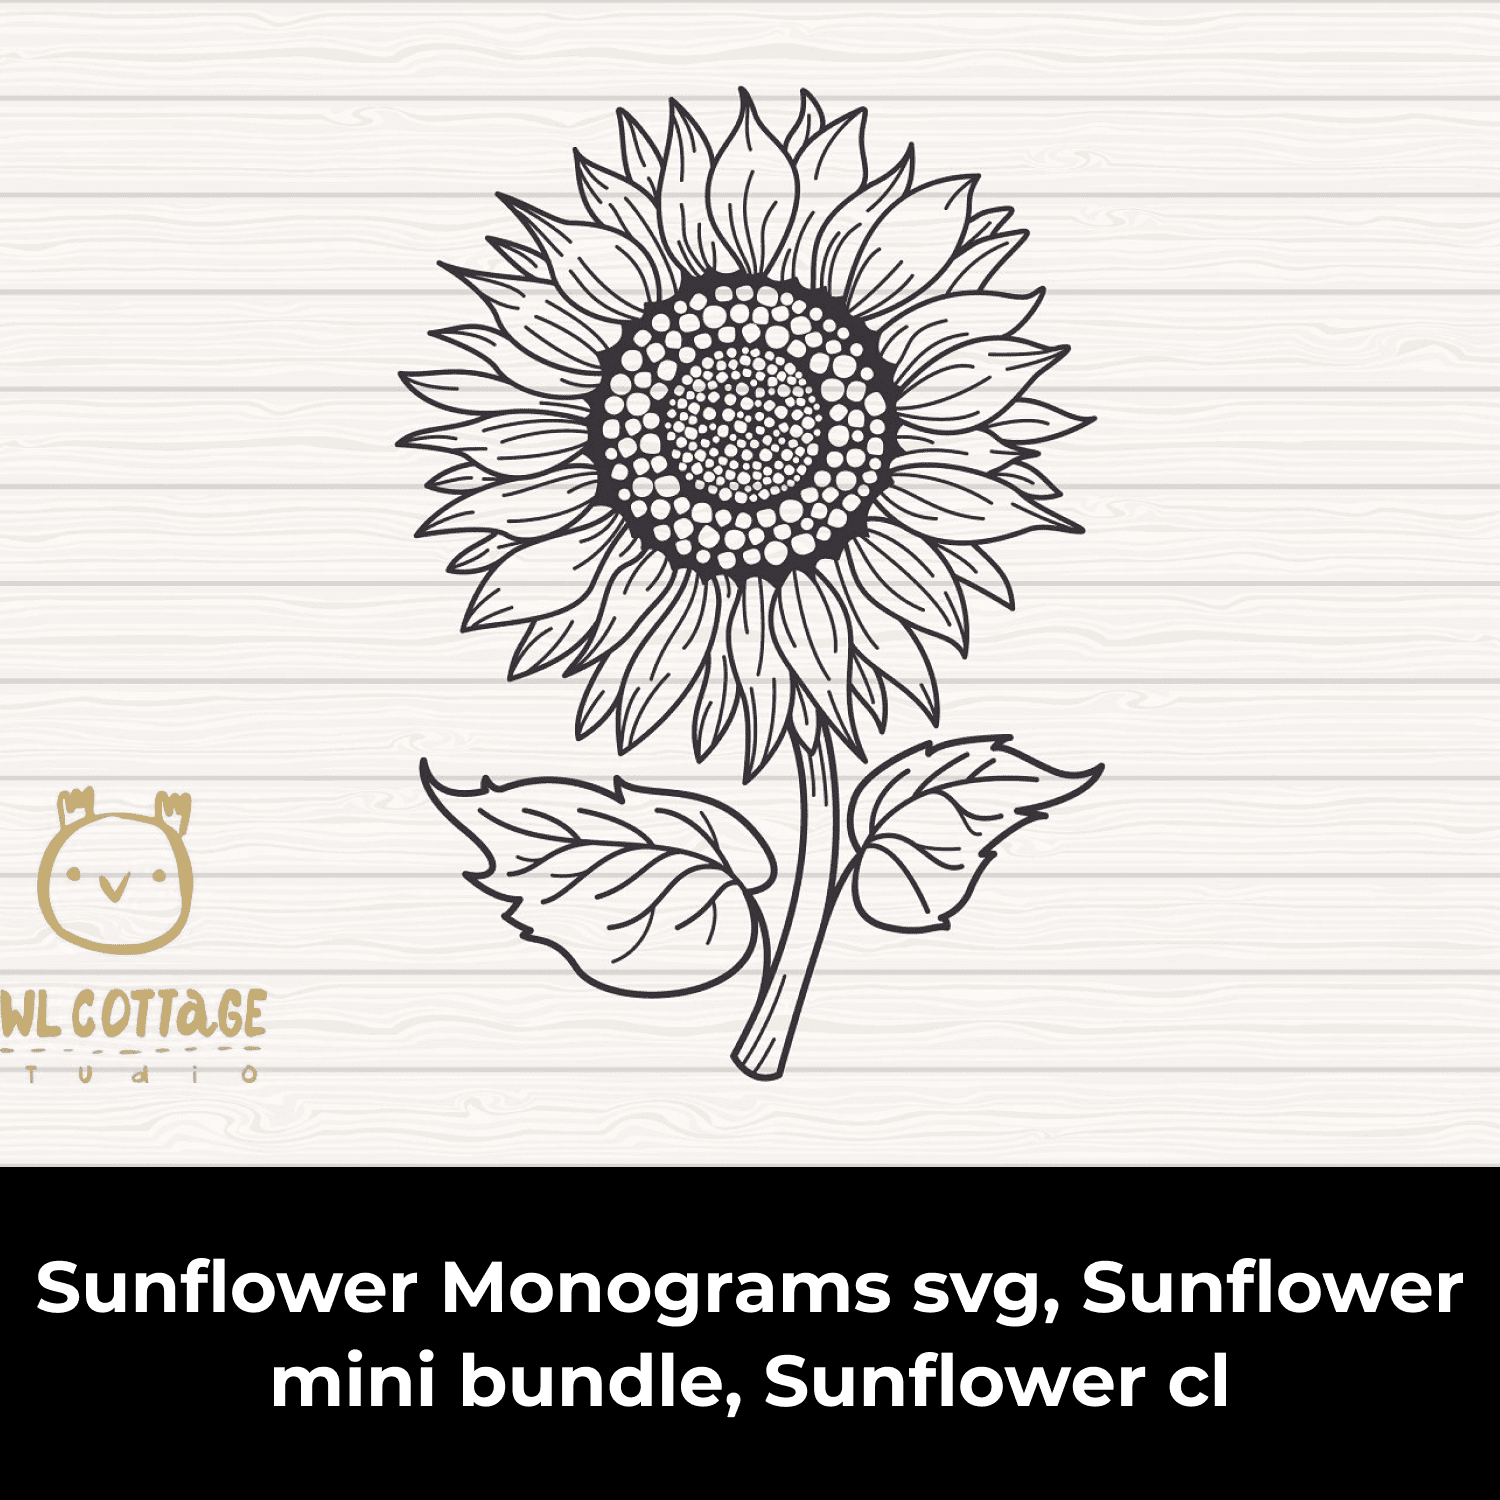 Sunflower Monograms svg, Sunflower mini bundle cover.